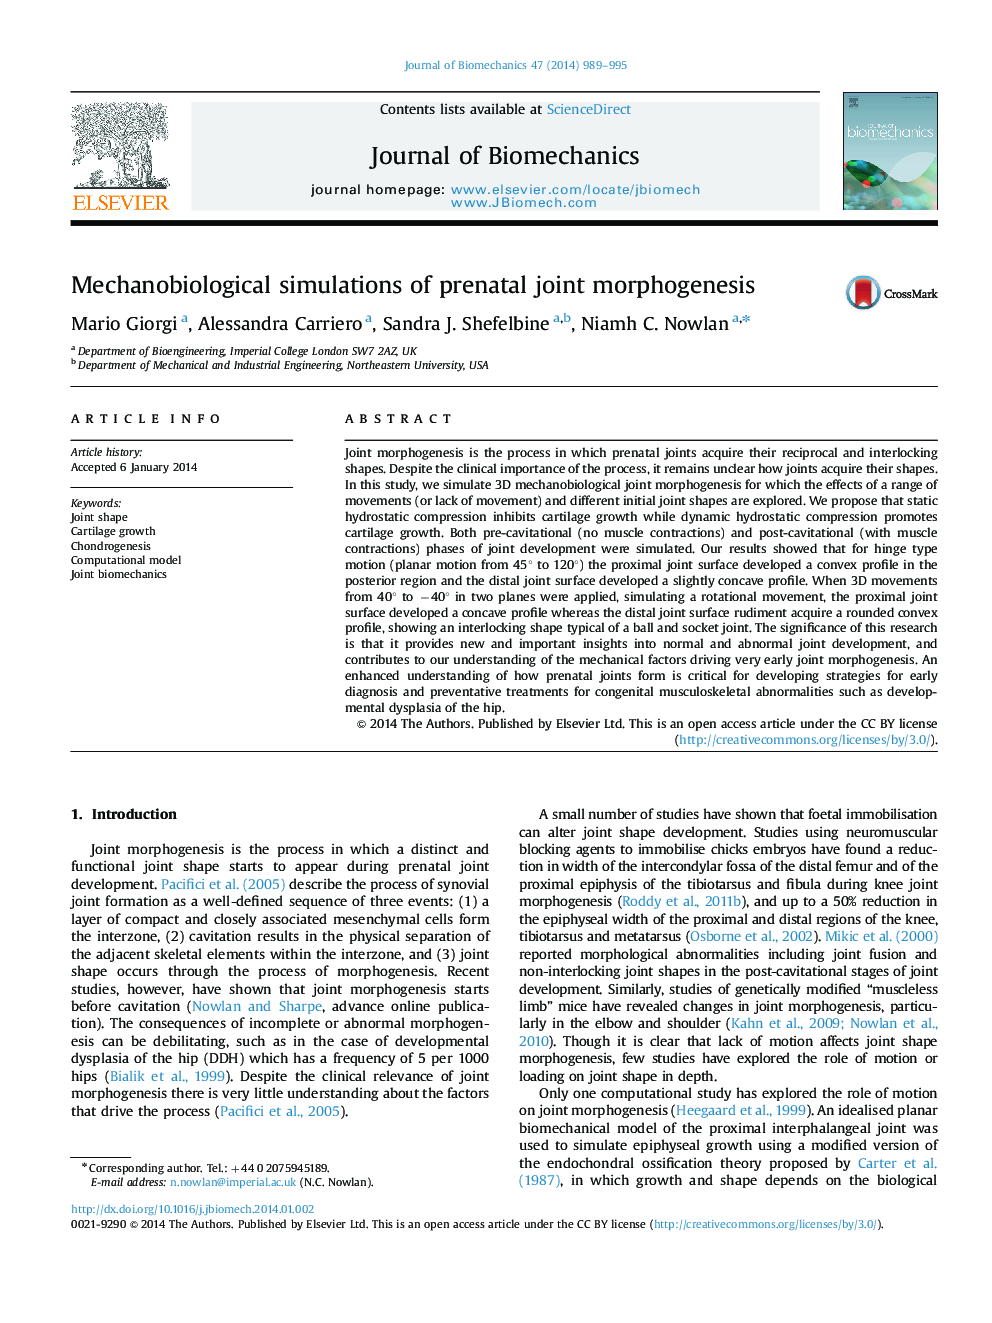 Mechanobiological simulations of prenatal joint morphogenesis